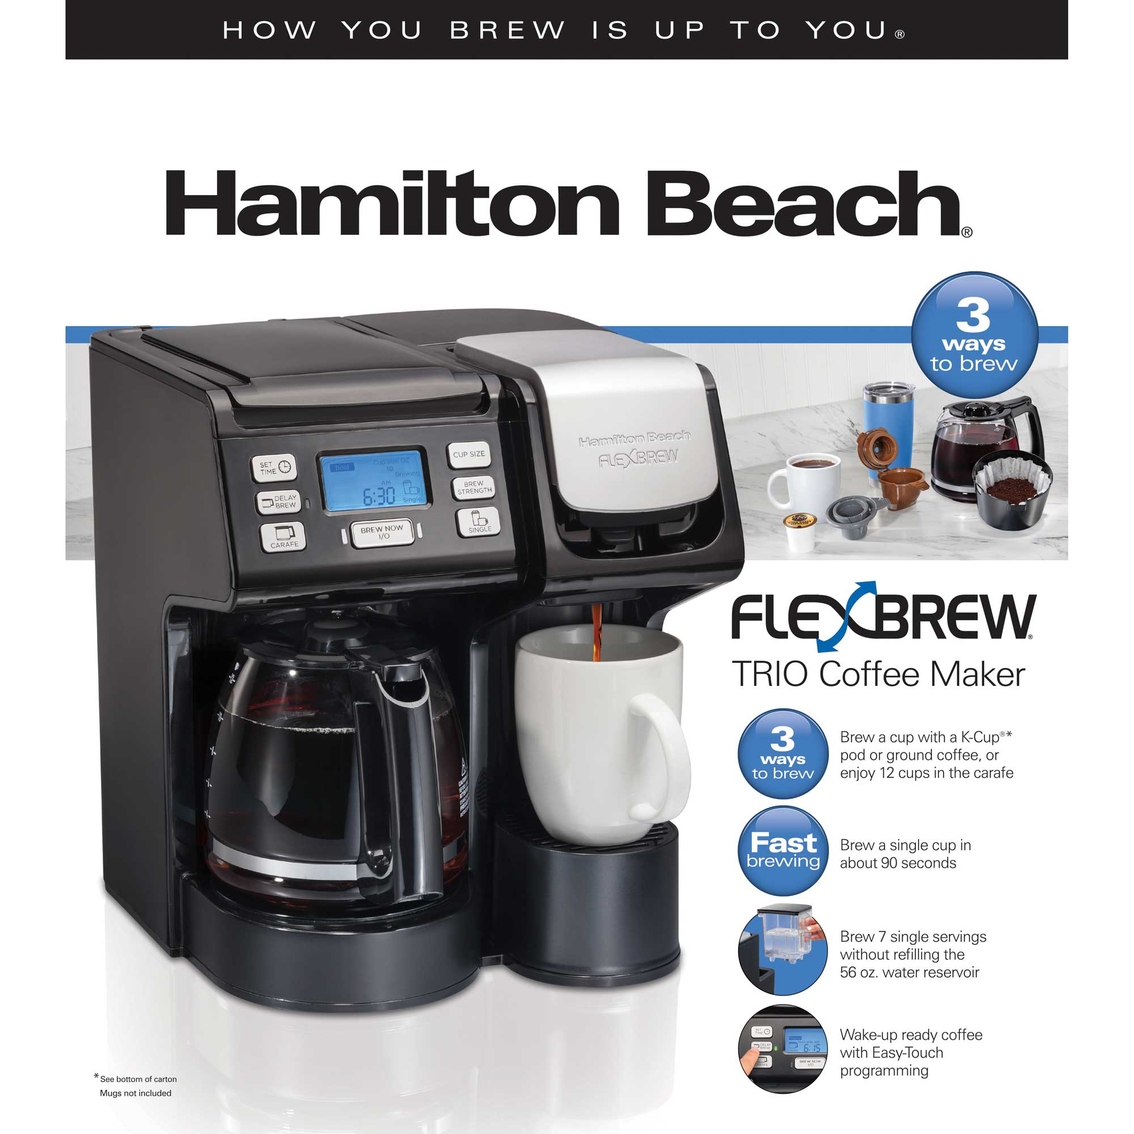 Hamilton Beach FlexBrew Trio Coffee Maker - Image 5 of 6